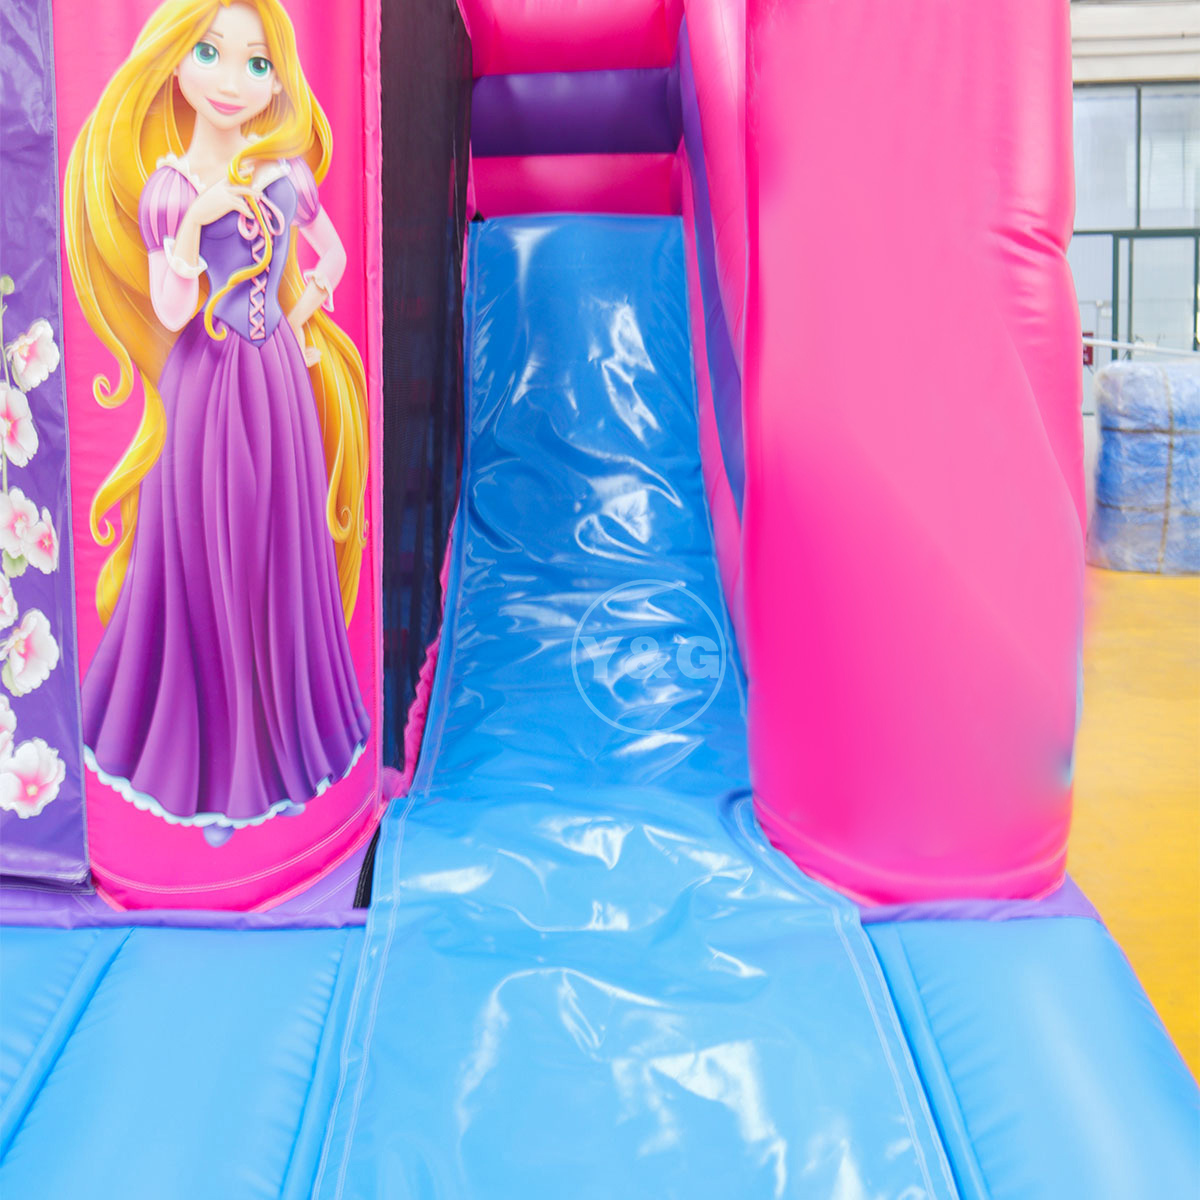 Inflatable princess castle slideYG-124